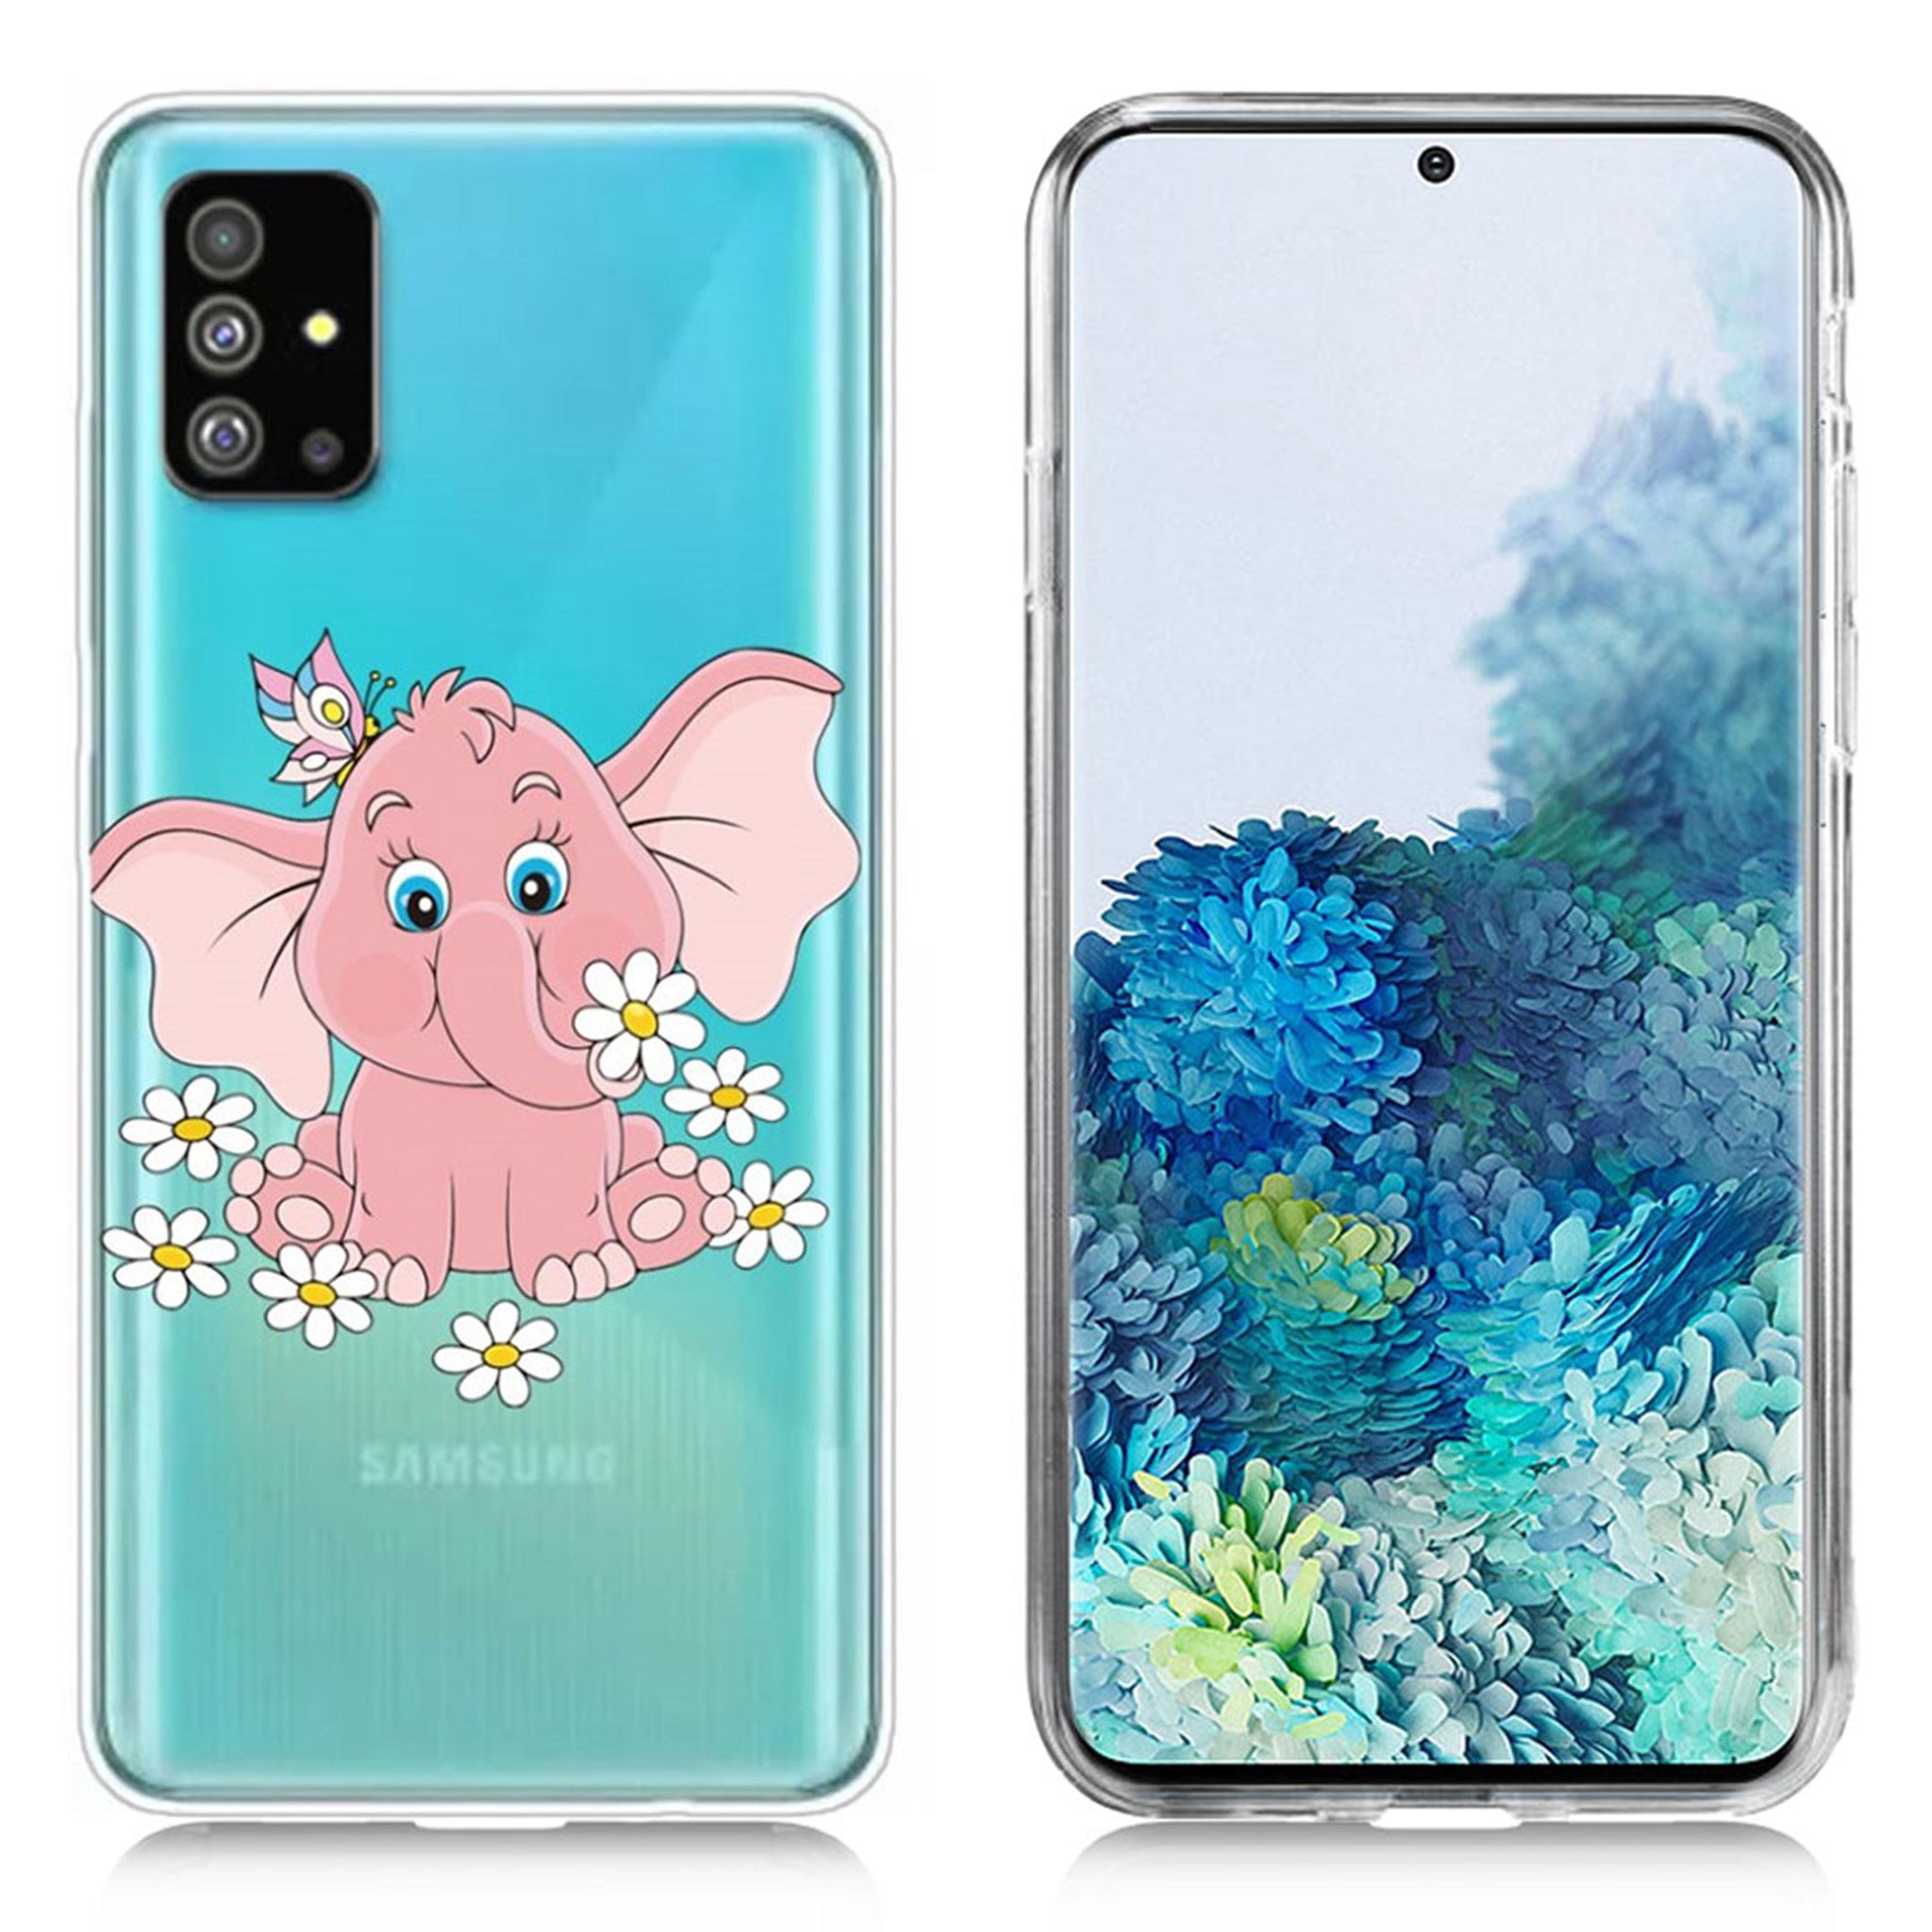 Deco Samsung Galaxy S20 Plus case - Elephant